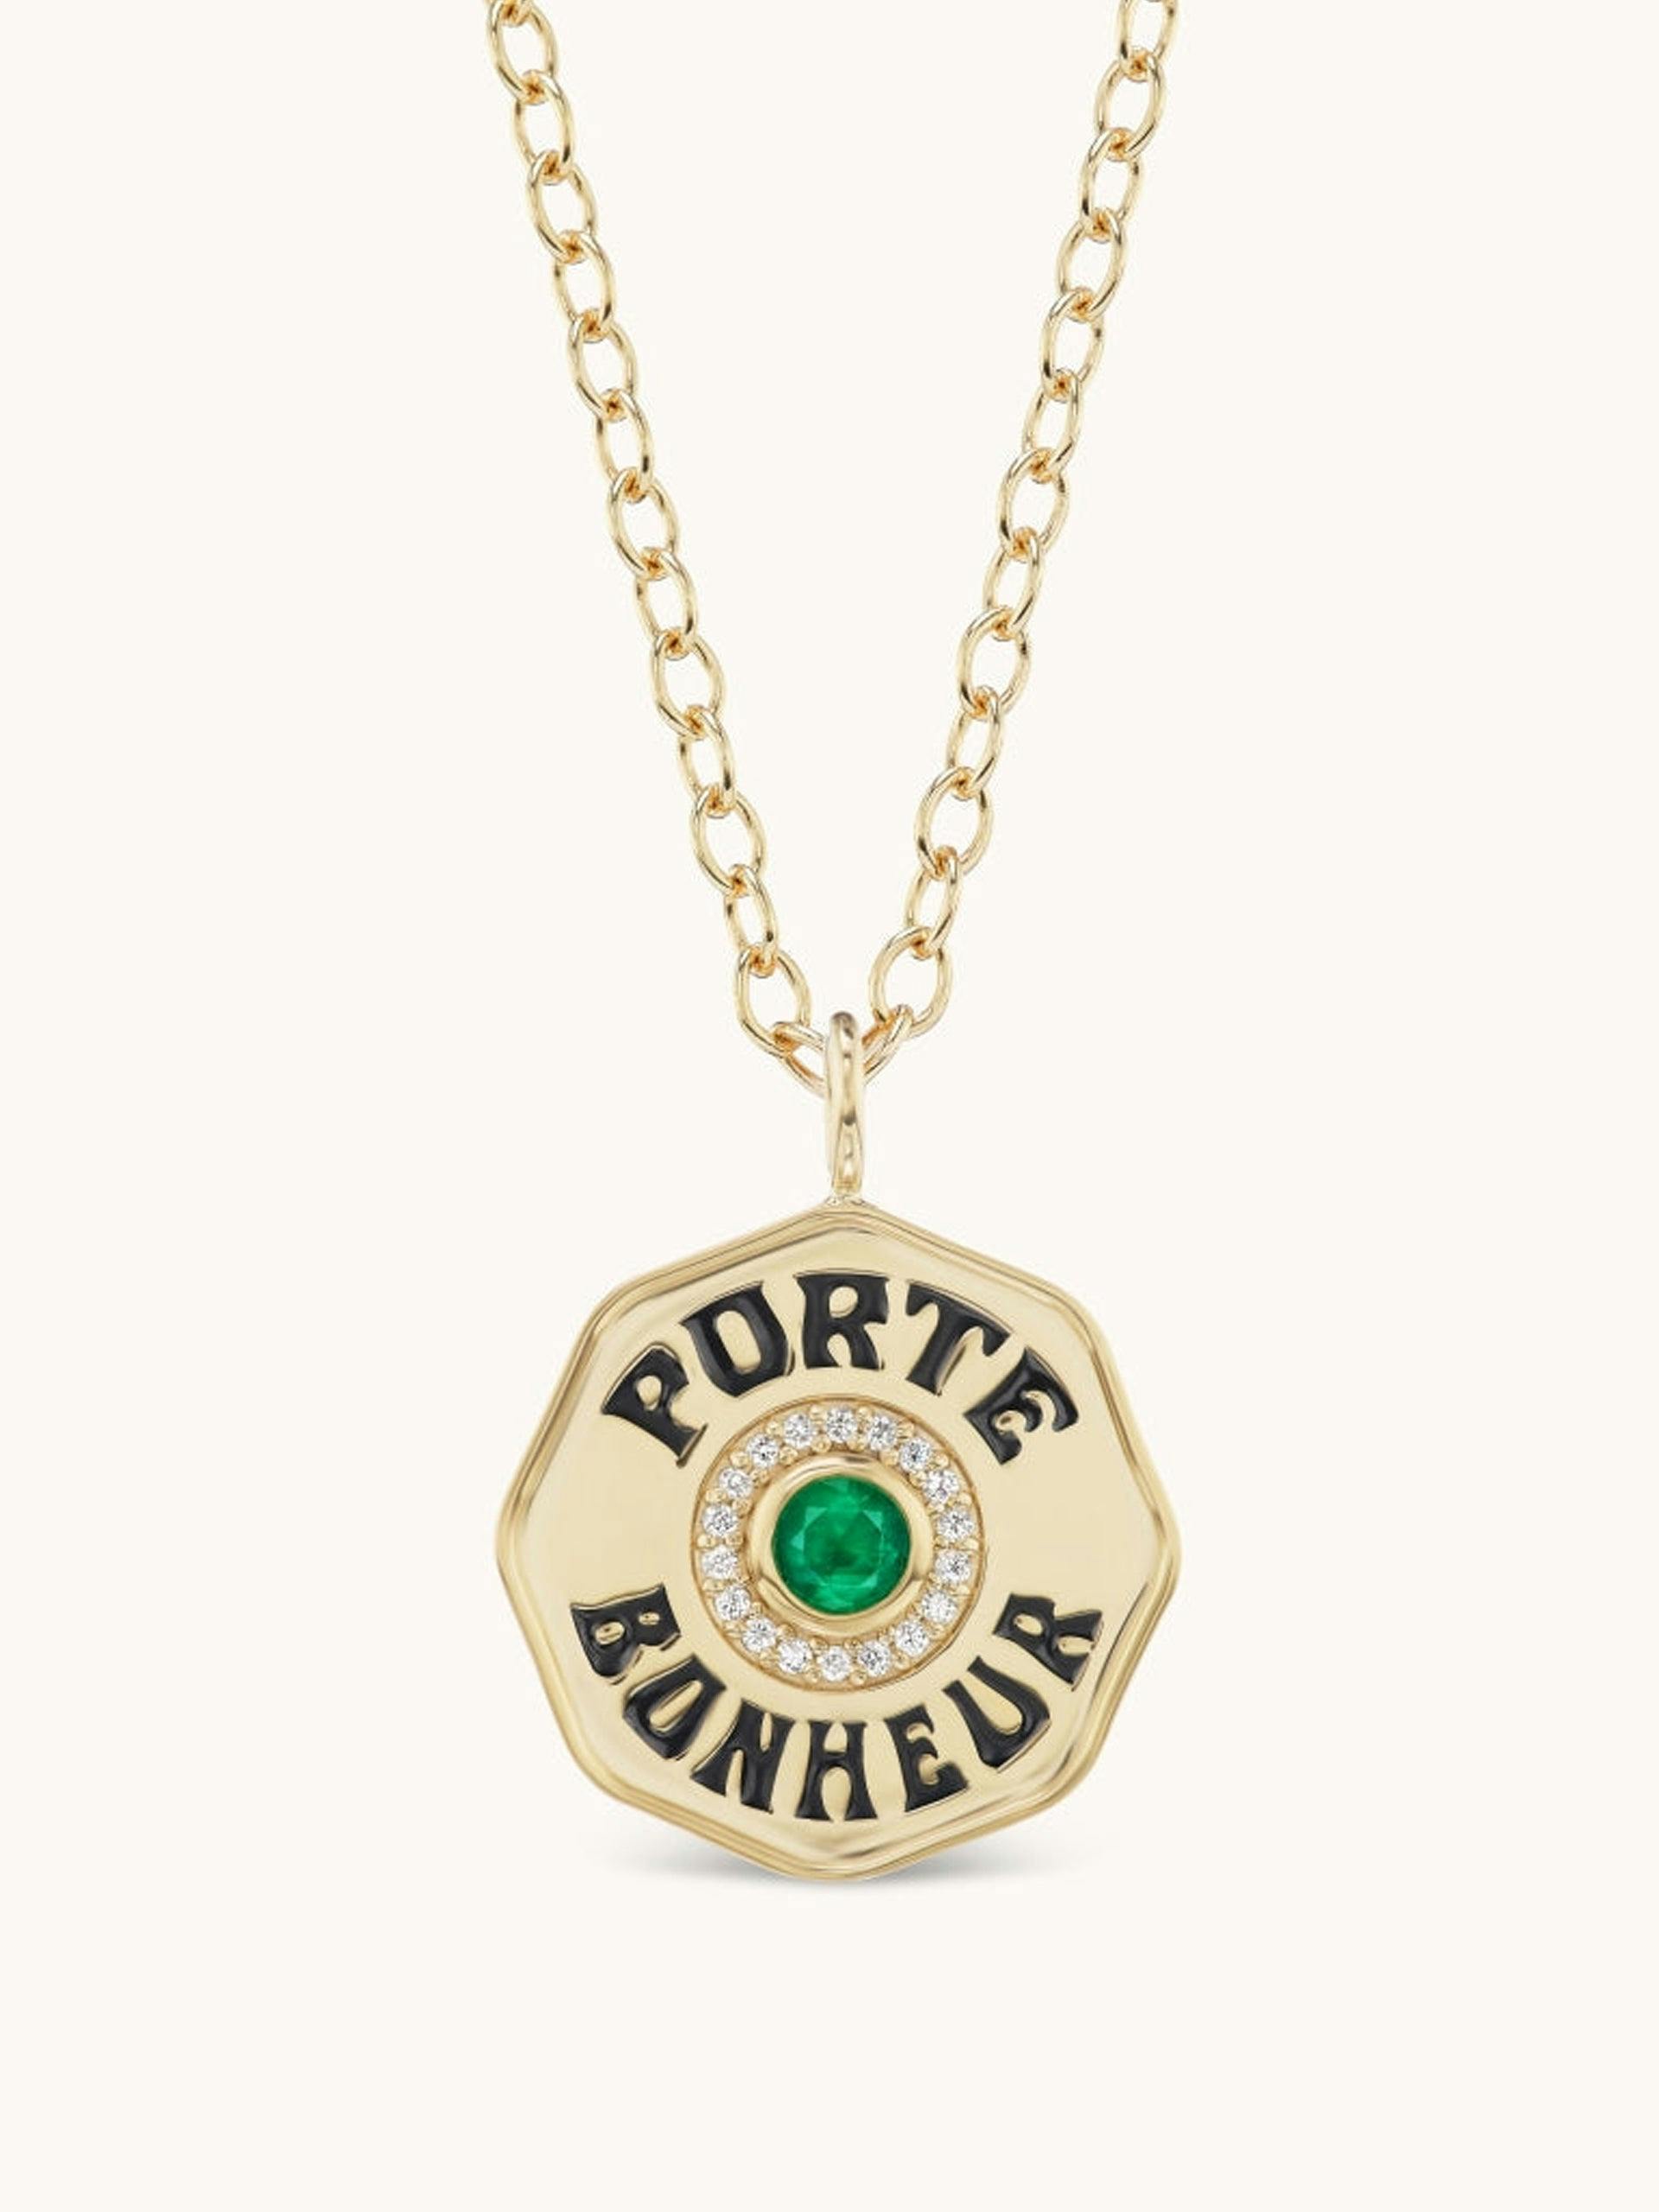 Large Porte Bonheur necklace with emerald bezel